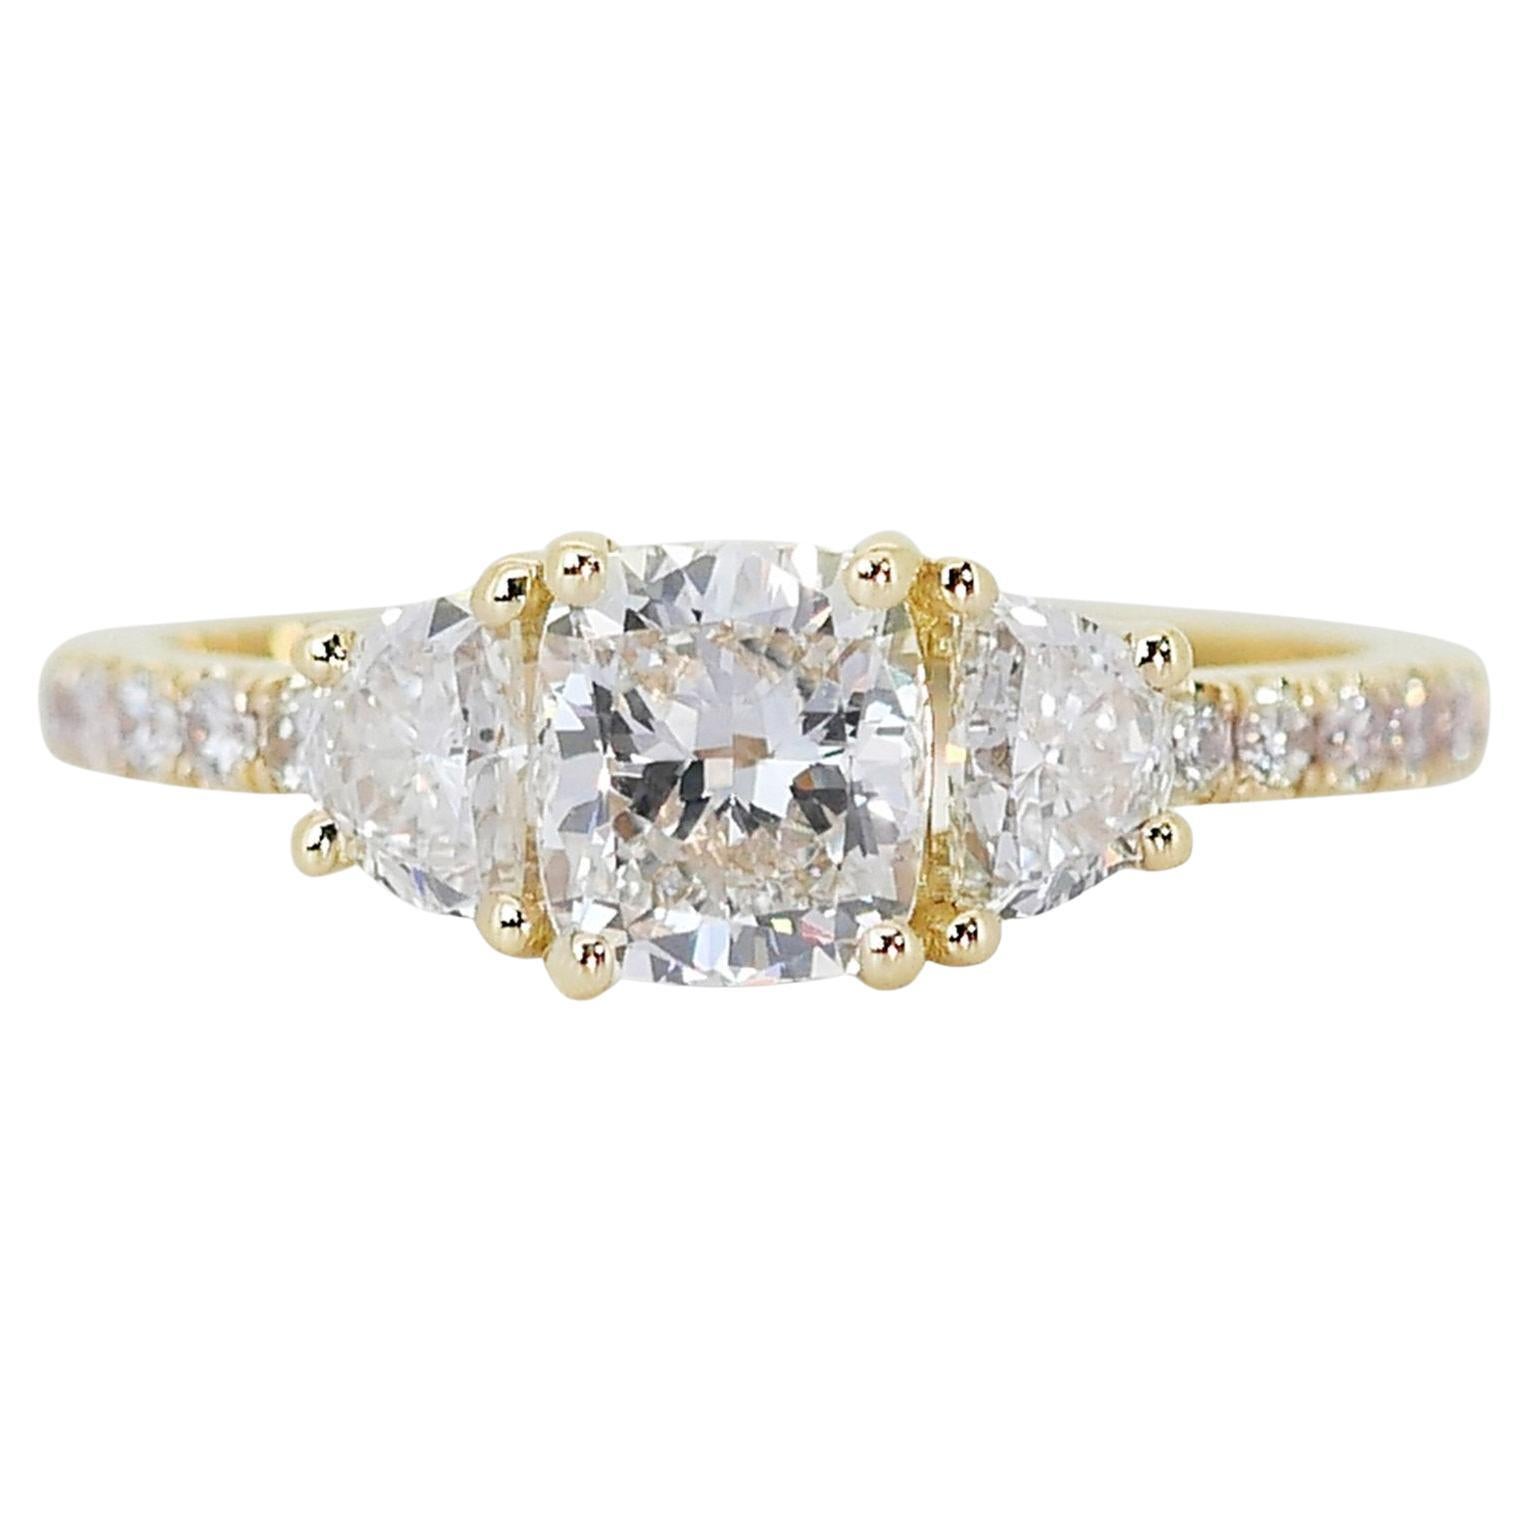 Stunning 1.23ct Diamonds 3-Stone Ring in 18k Yellow Gold - GIA Certified